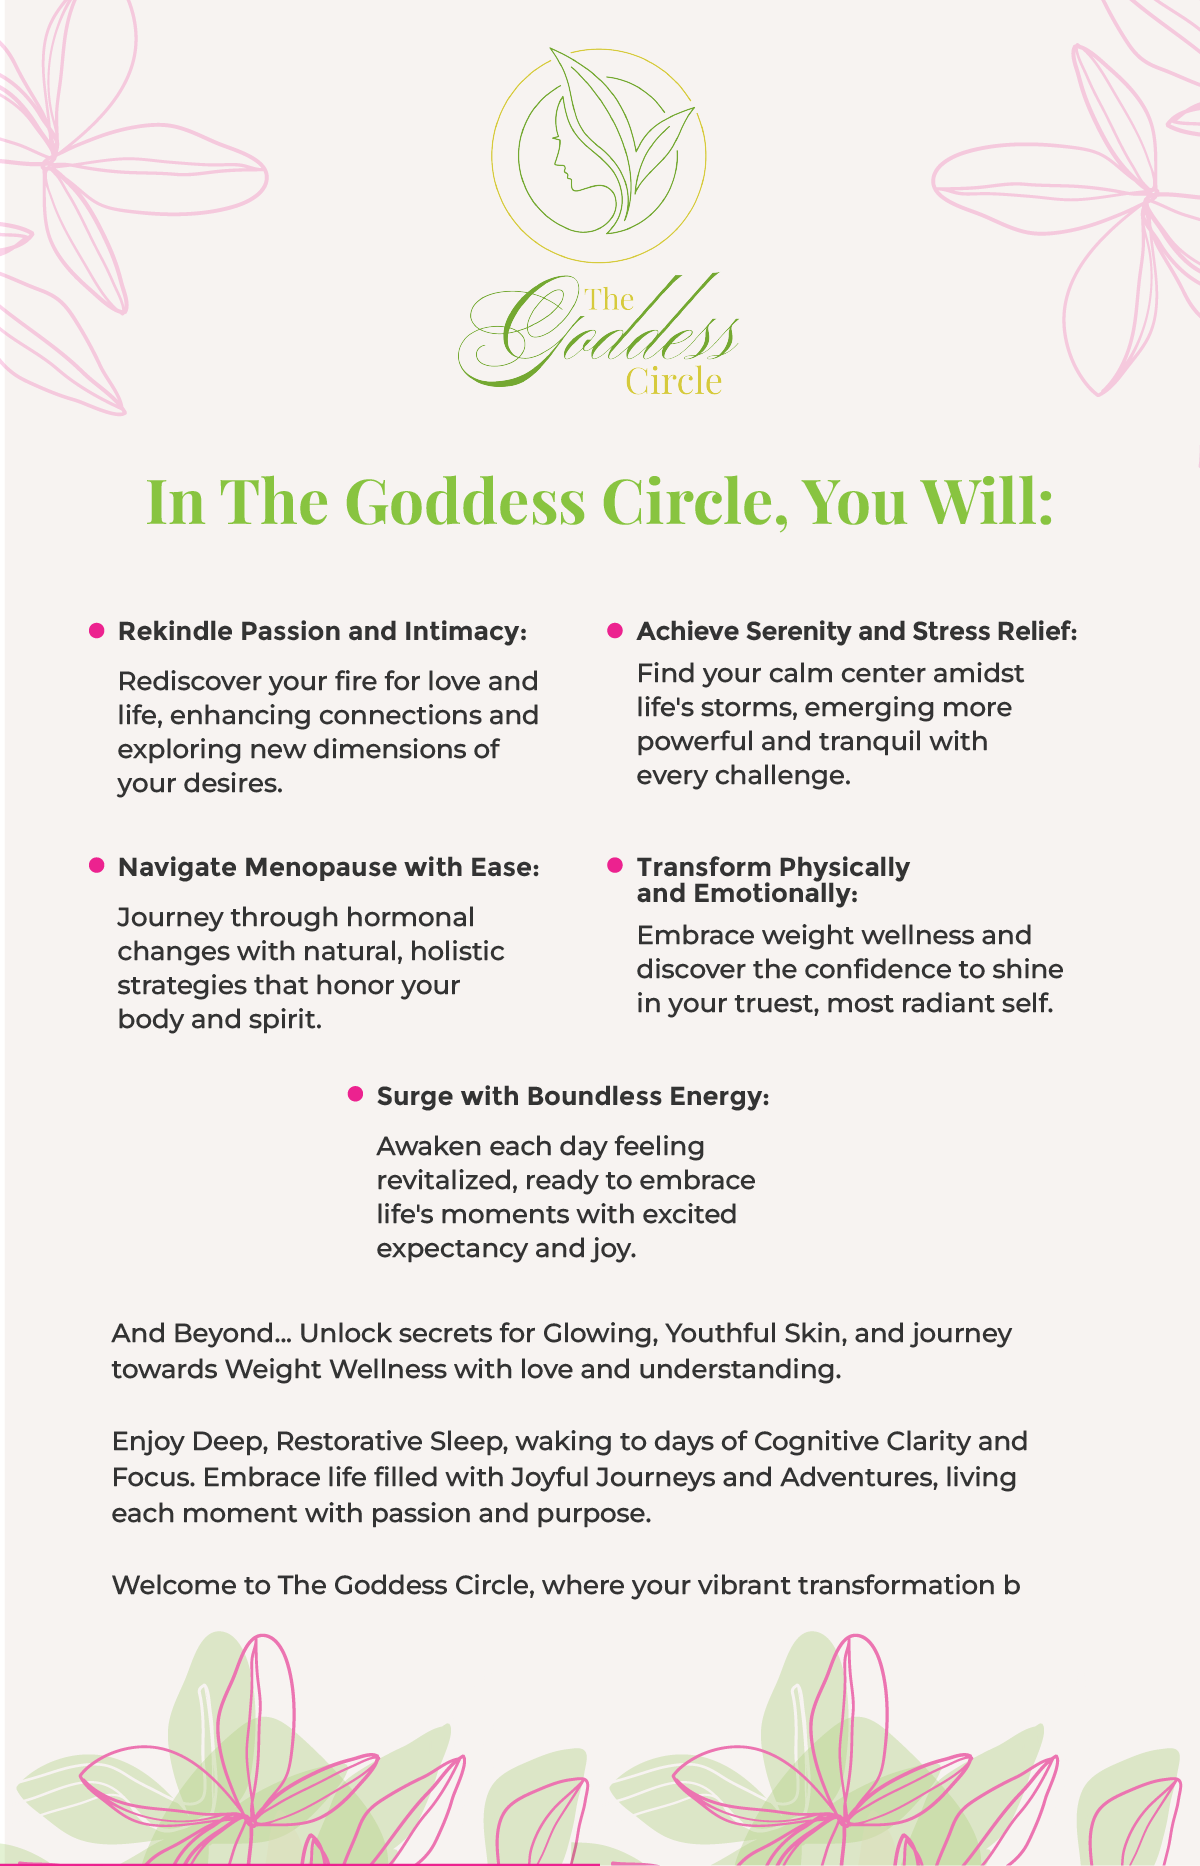 The Goddess Circle